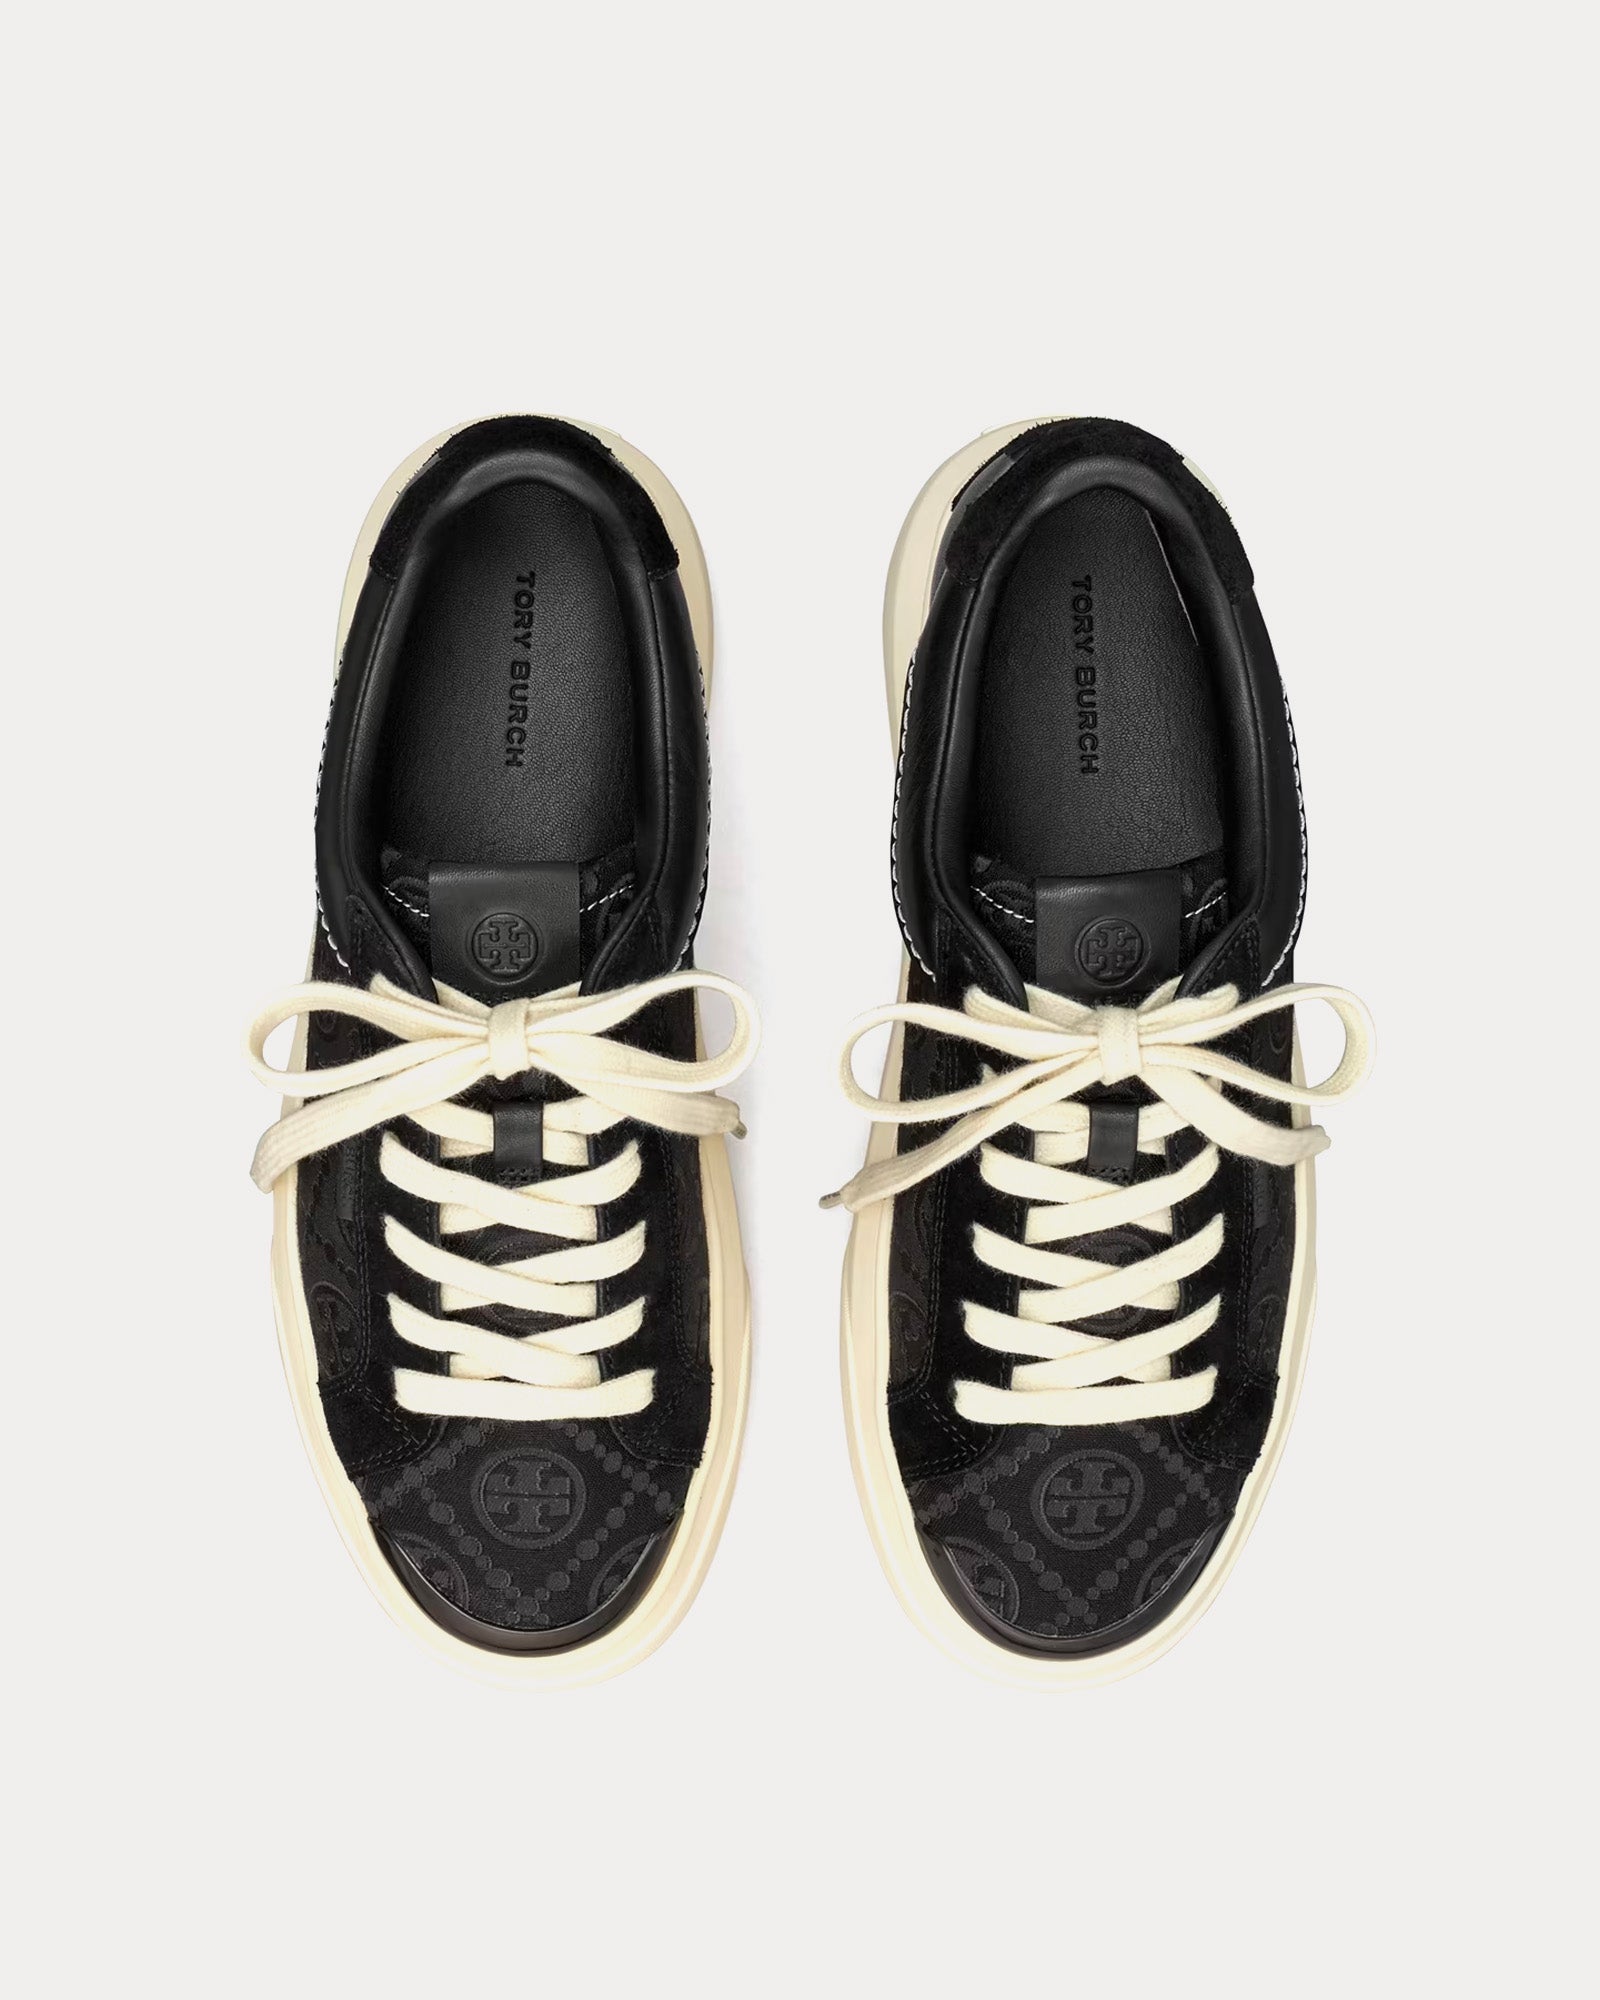 Tory Burch - T Monogram Ladybug Inverted Black / Perfect Black Low Top Sneakers